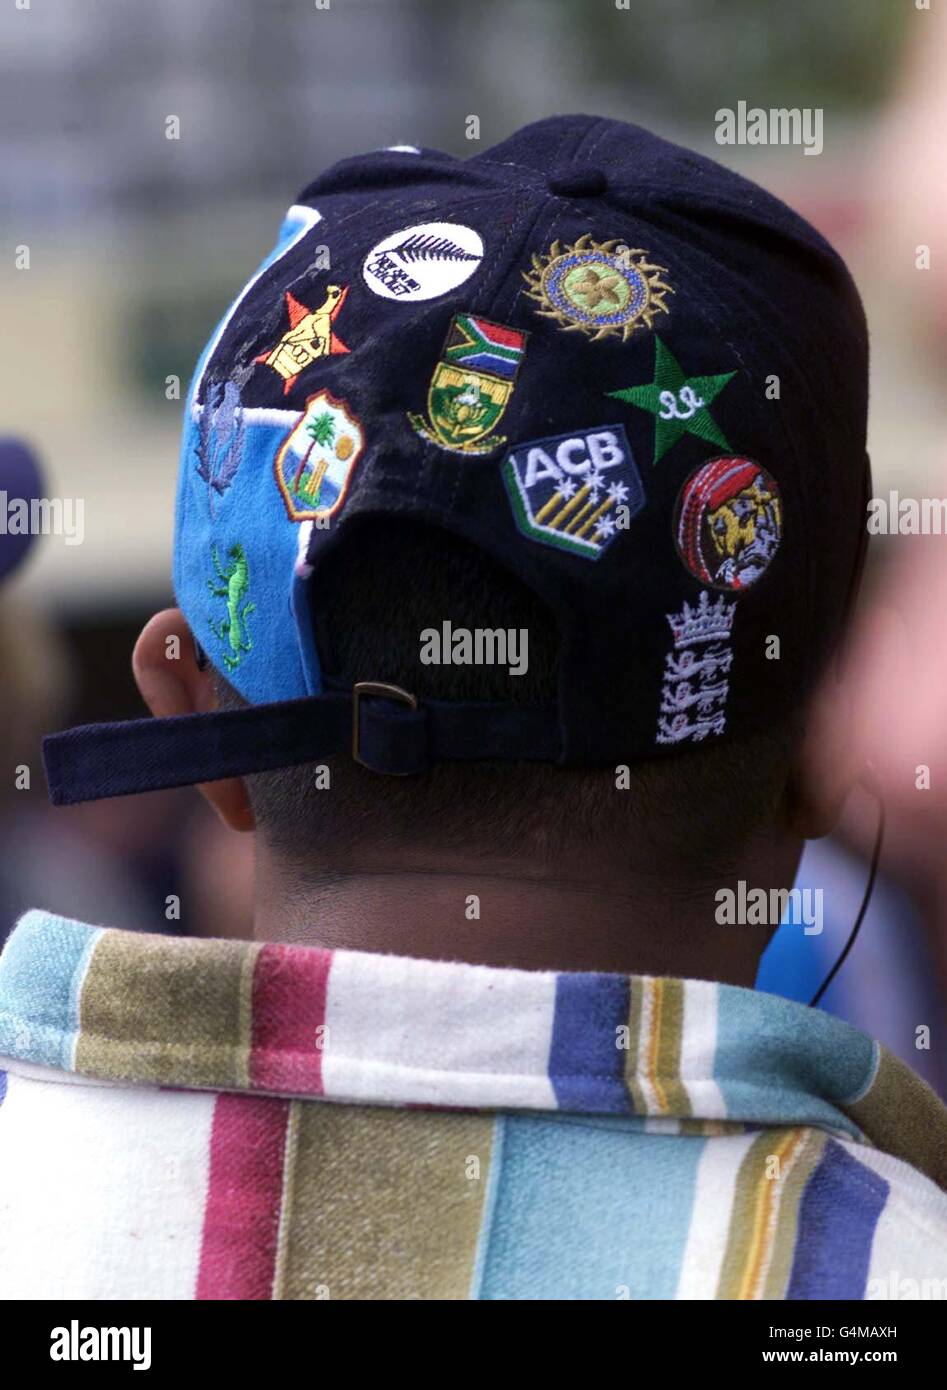 Cricket/World Cup-logos on cap Stock Photo - Alamy